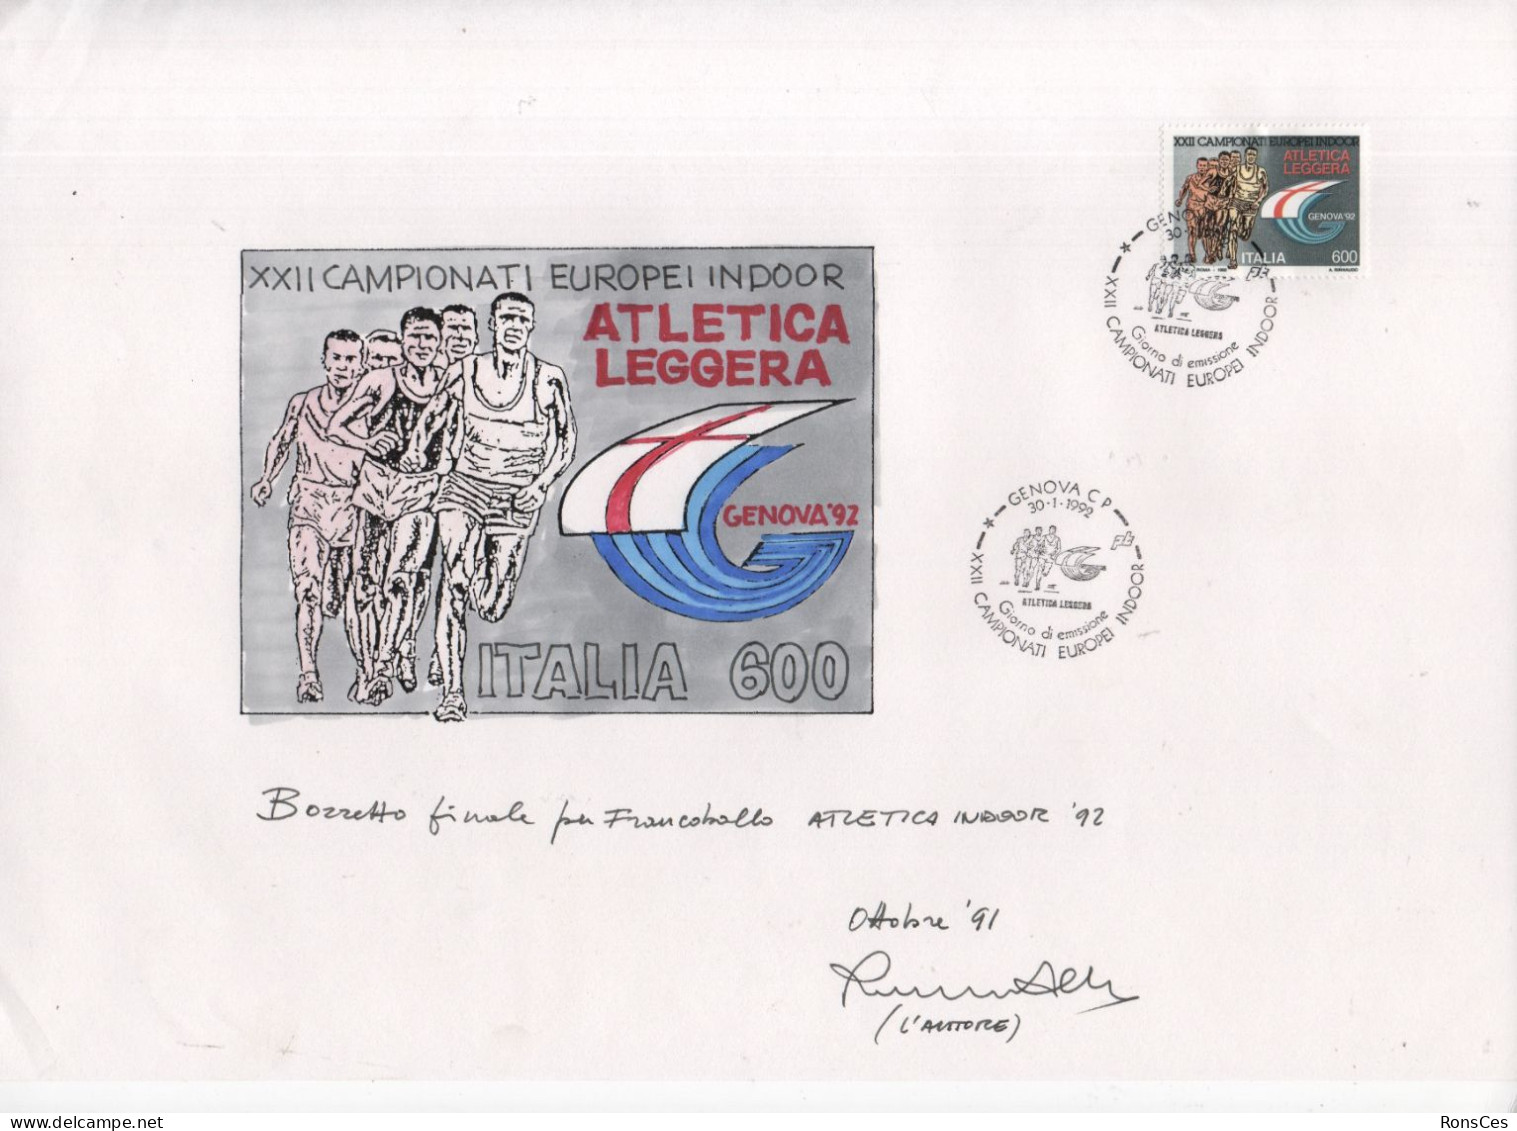 ATHLETICS - ITALIA GENOVA 1992 - XXII CAMPIONATI EUROPEI INDOOR D'ATLETICA LEGGERA - BOZZETTO FINALE FRANCOBOLLO - A - Athlétisme